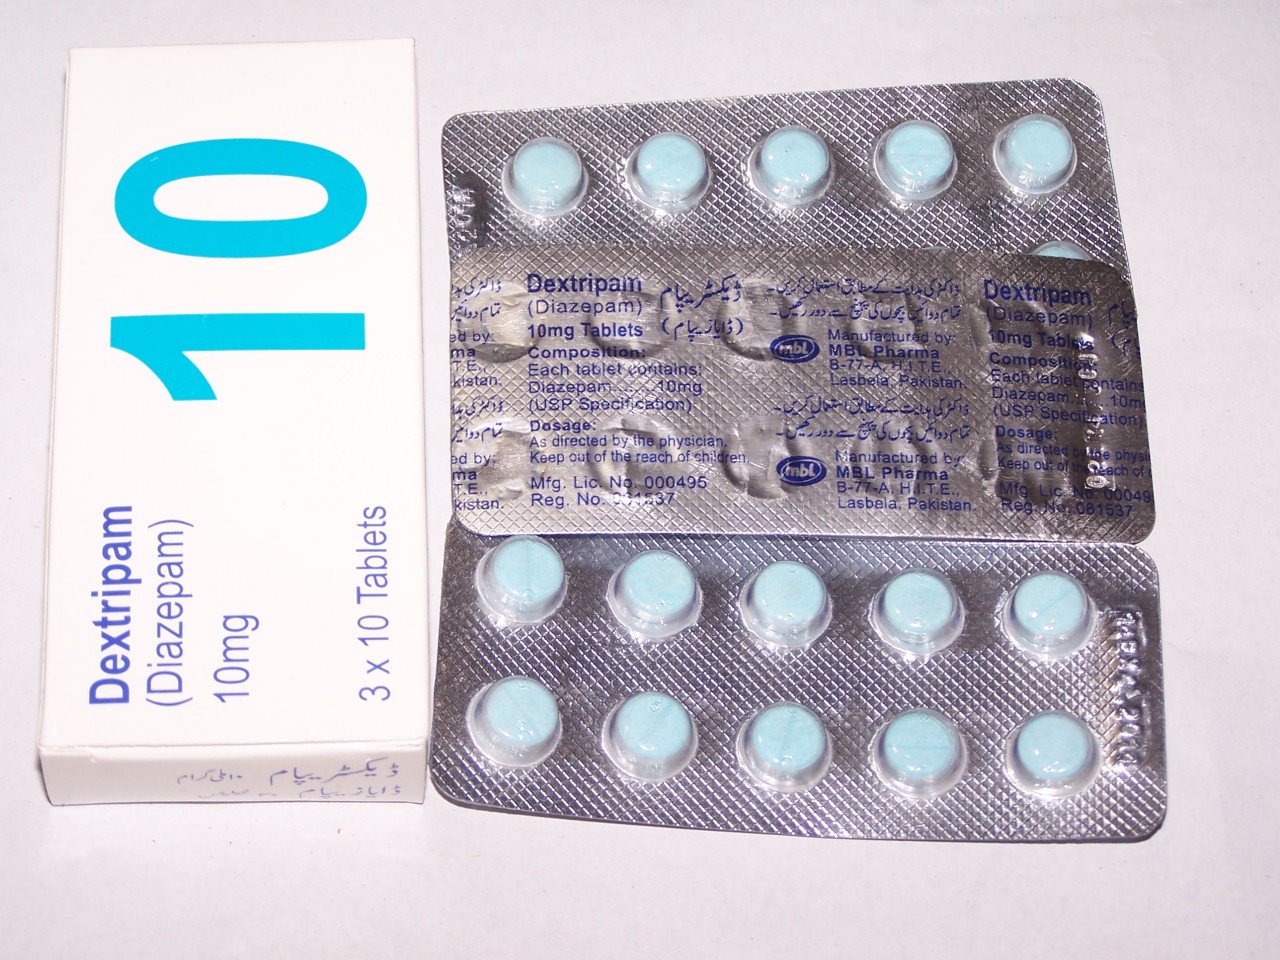 Dextripam Diazepam 10mg by MBL Pharma x 100 Strip - 24hrpharmaUSA.com